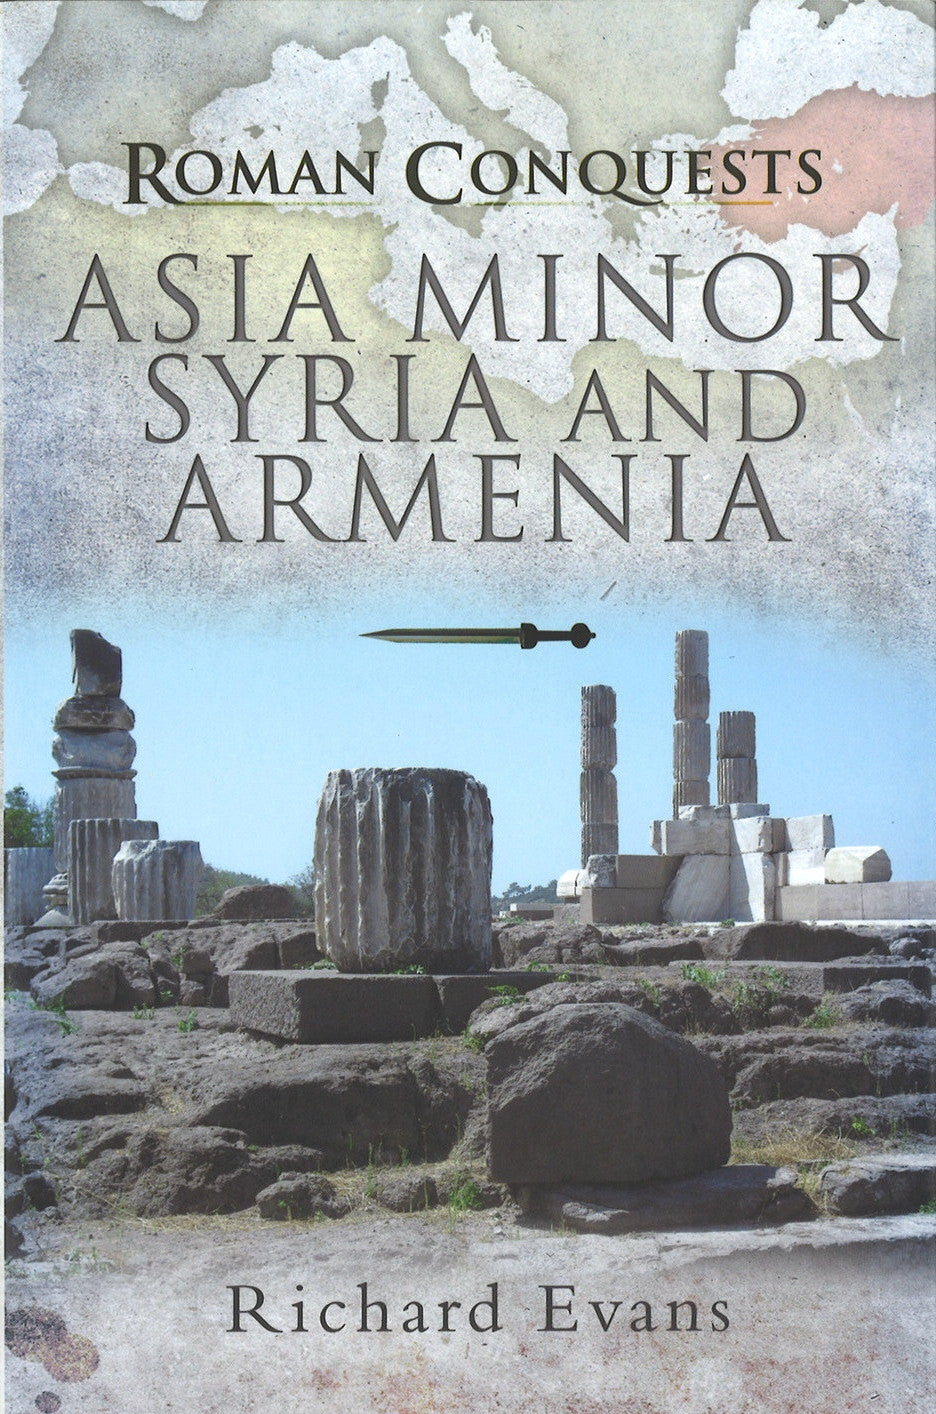 ROMAN CONQUESTS: Asia Minor Syria and Armenia